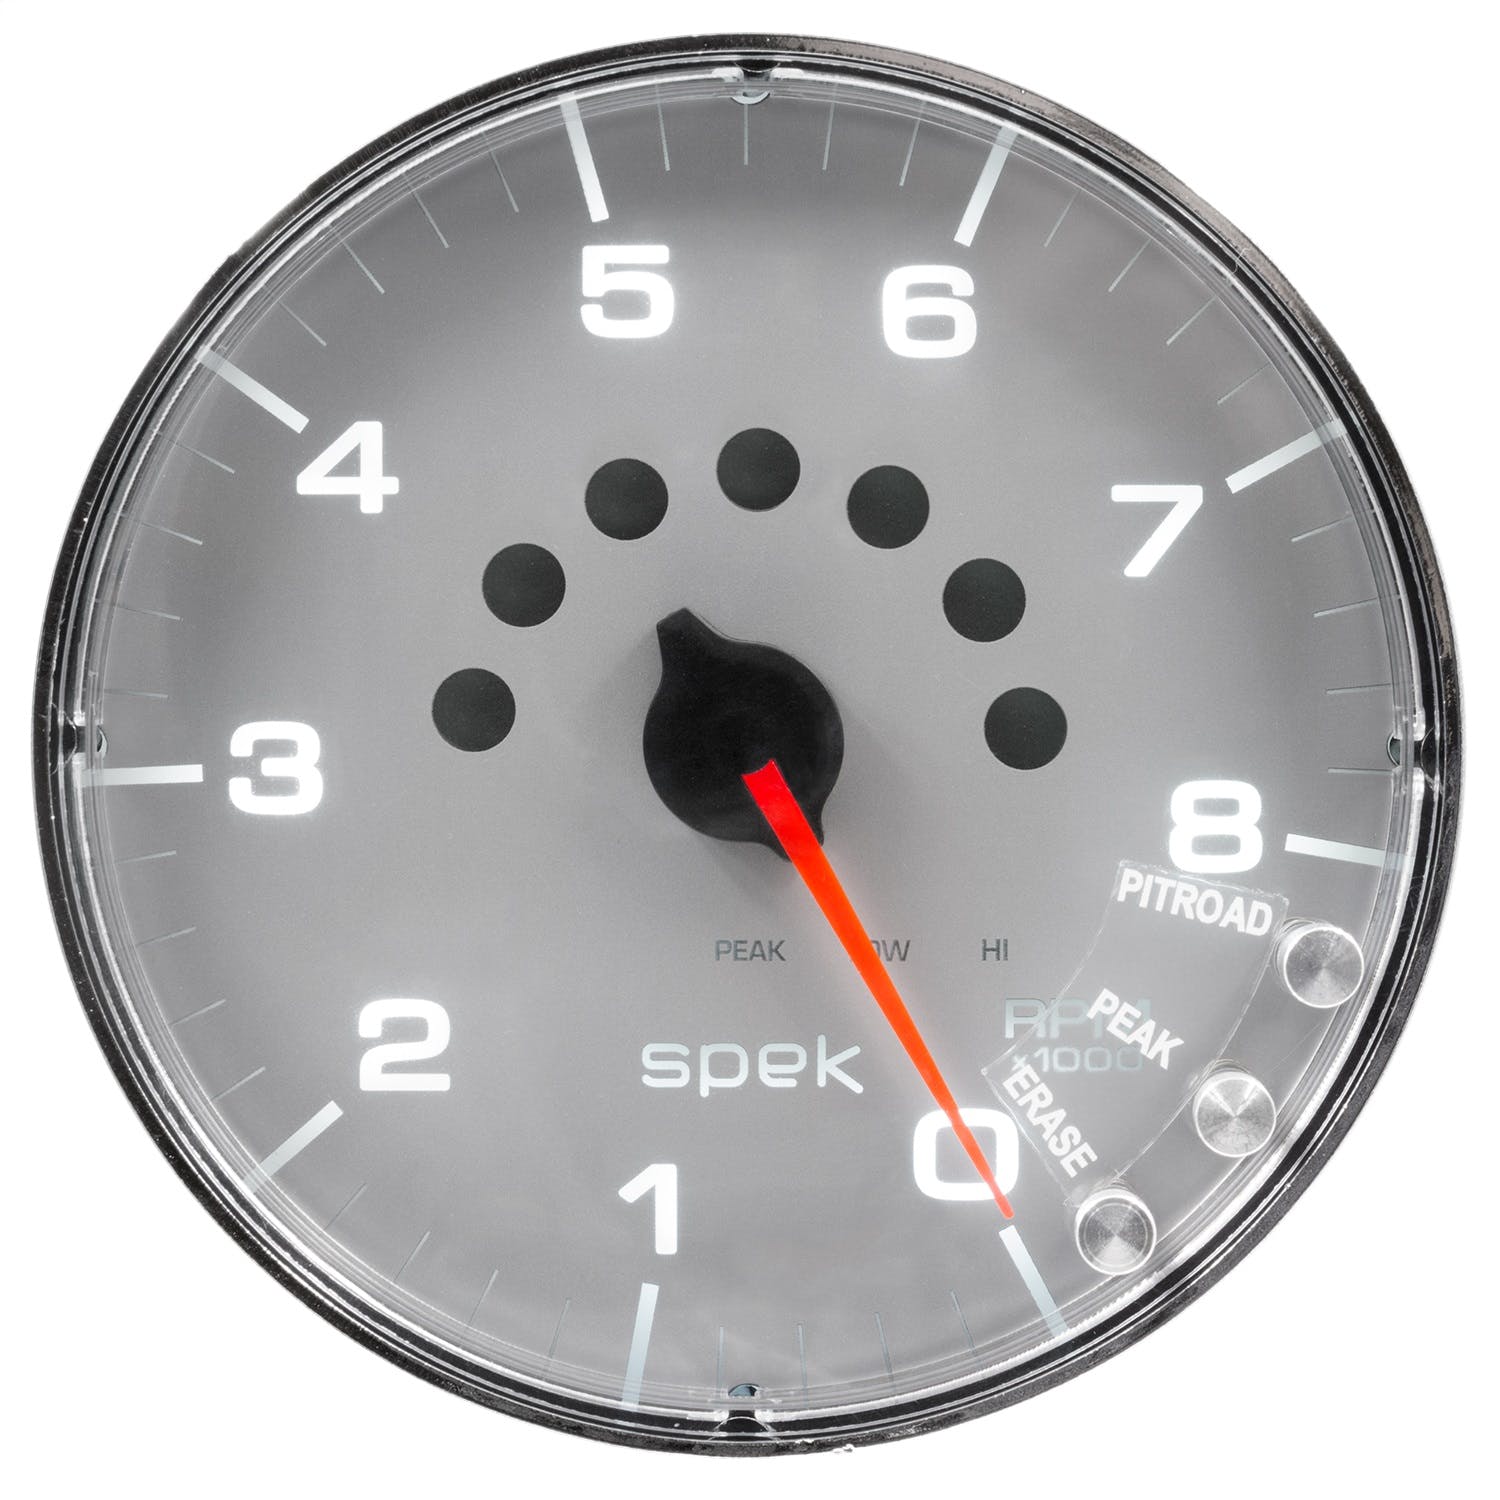 AutoMeter Products P238218 Spek Pro Tachometer Gauge 5, 8K RPM, with Shift Light, Silver/Chrome